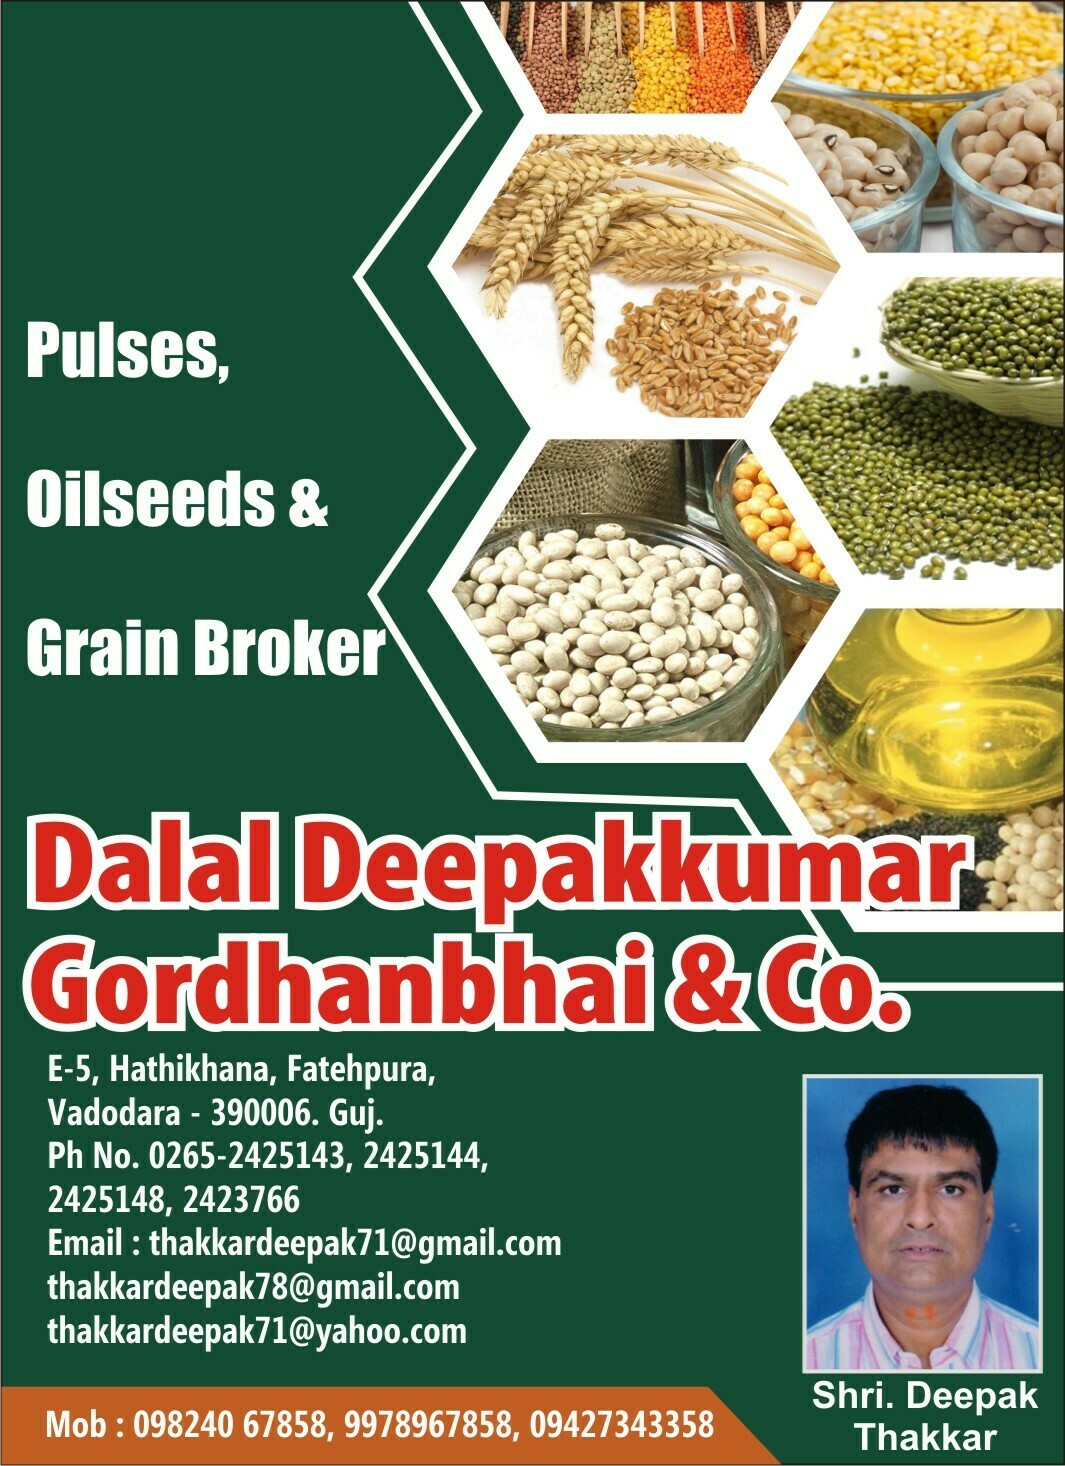 Dalal Deepakkumar Gordhanbhai and Co.